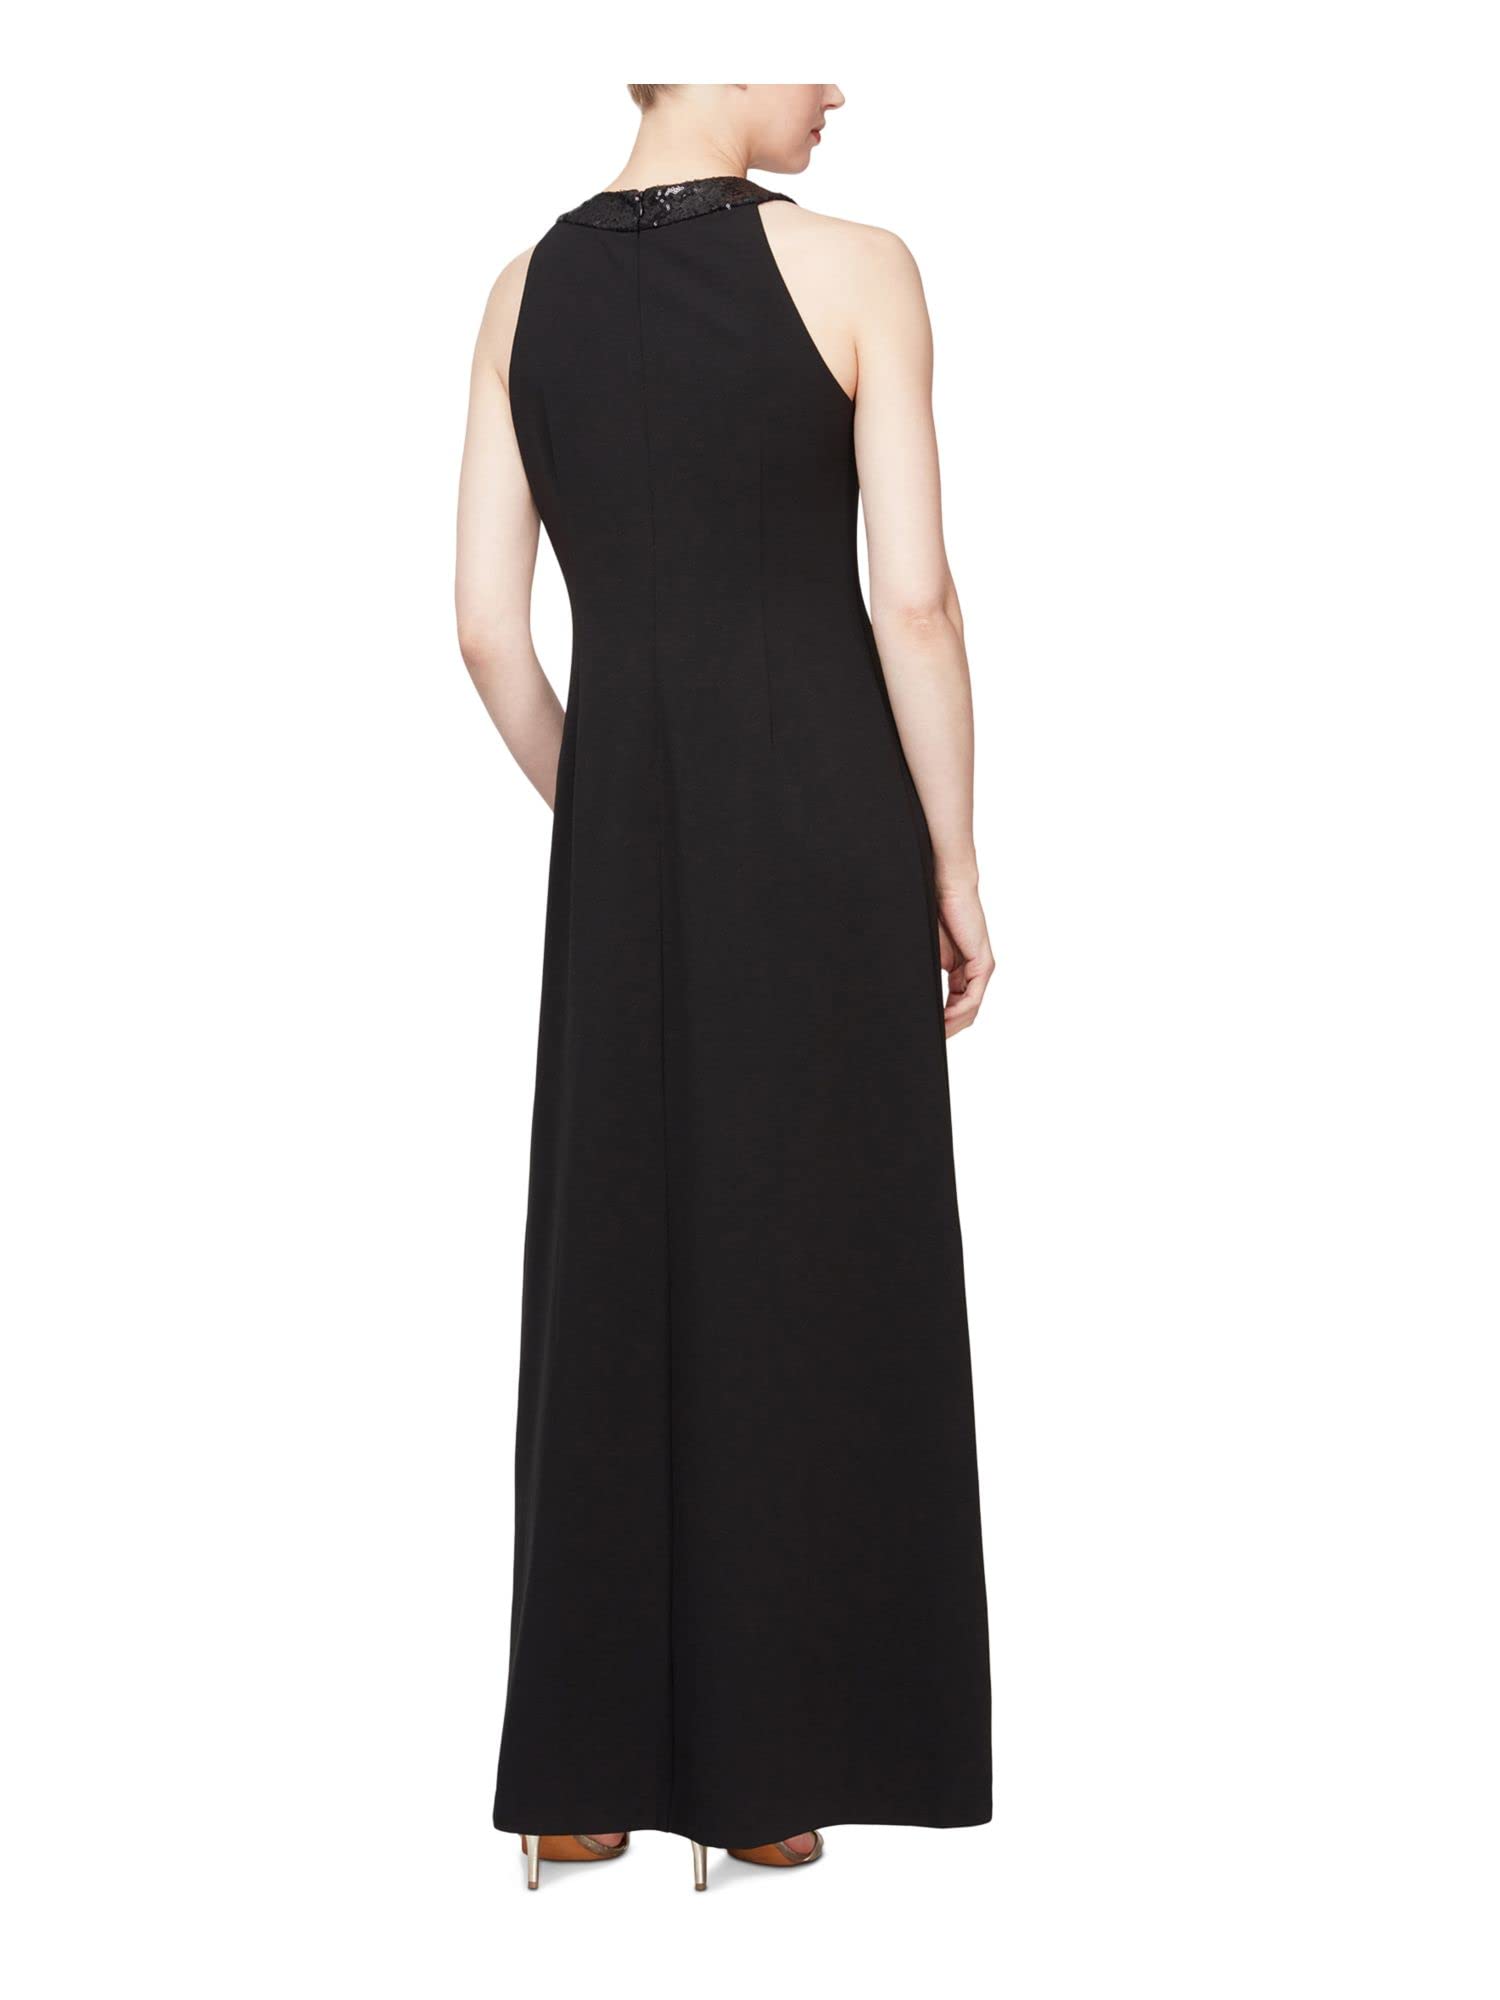 S.L. Fashions Women's Jewel Neck Drape Front Dress